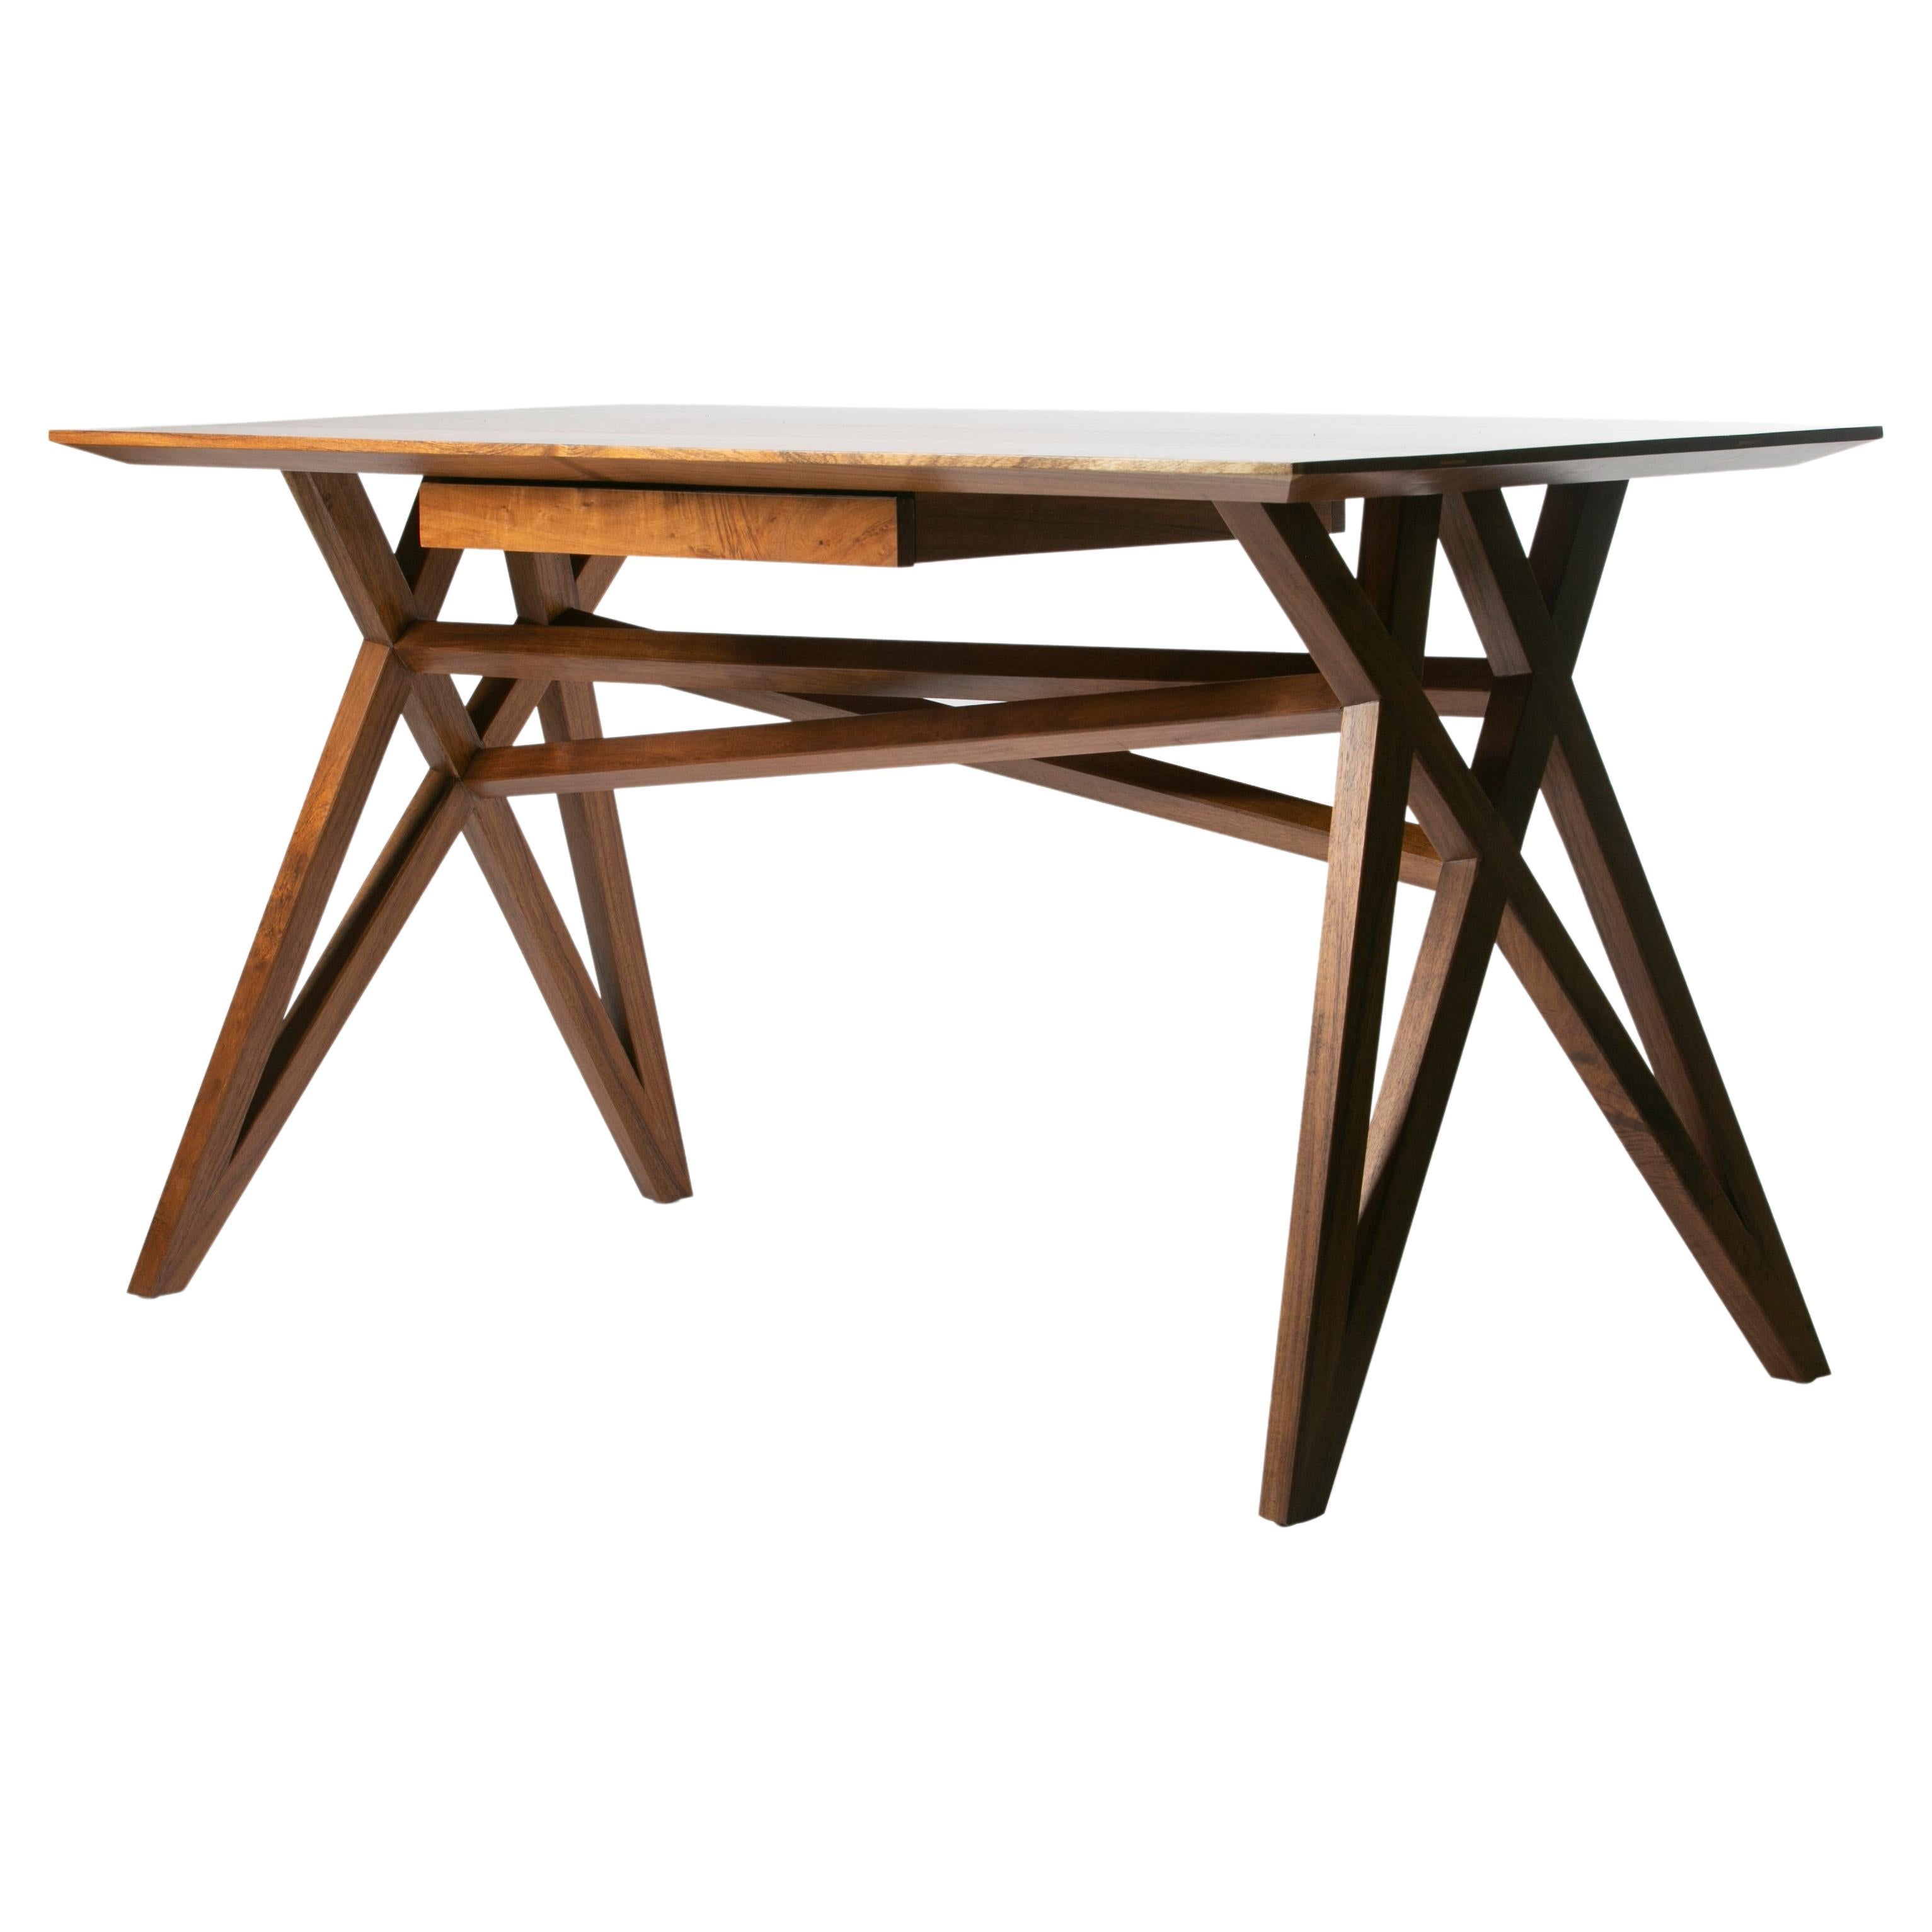 Mixquic 140 Tropical Hardwood Desk, Contemporary Mexican Design